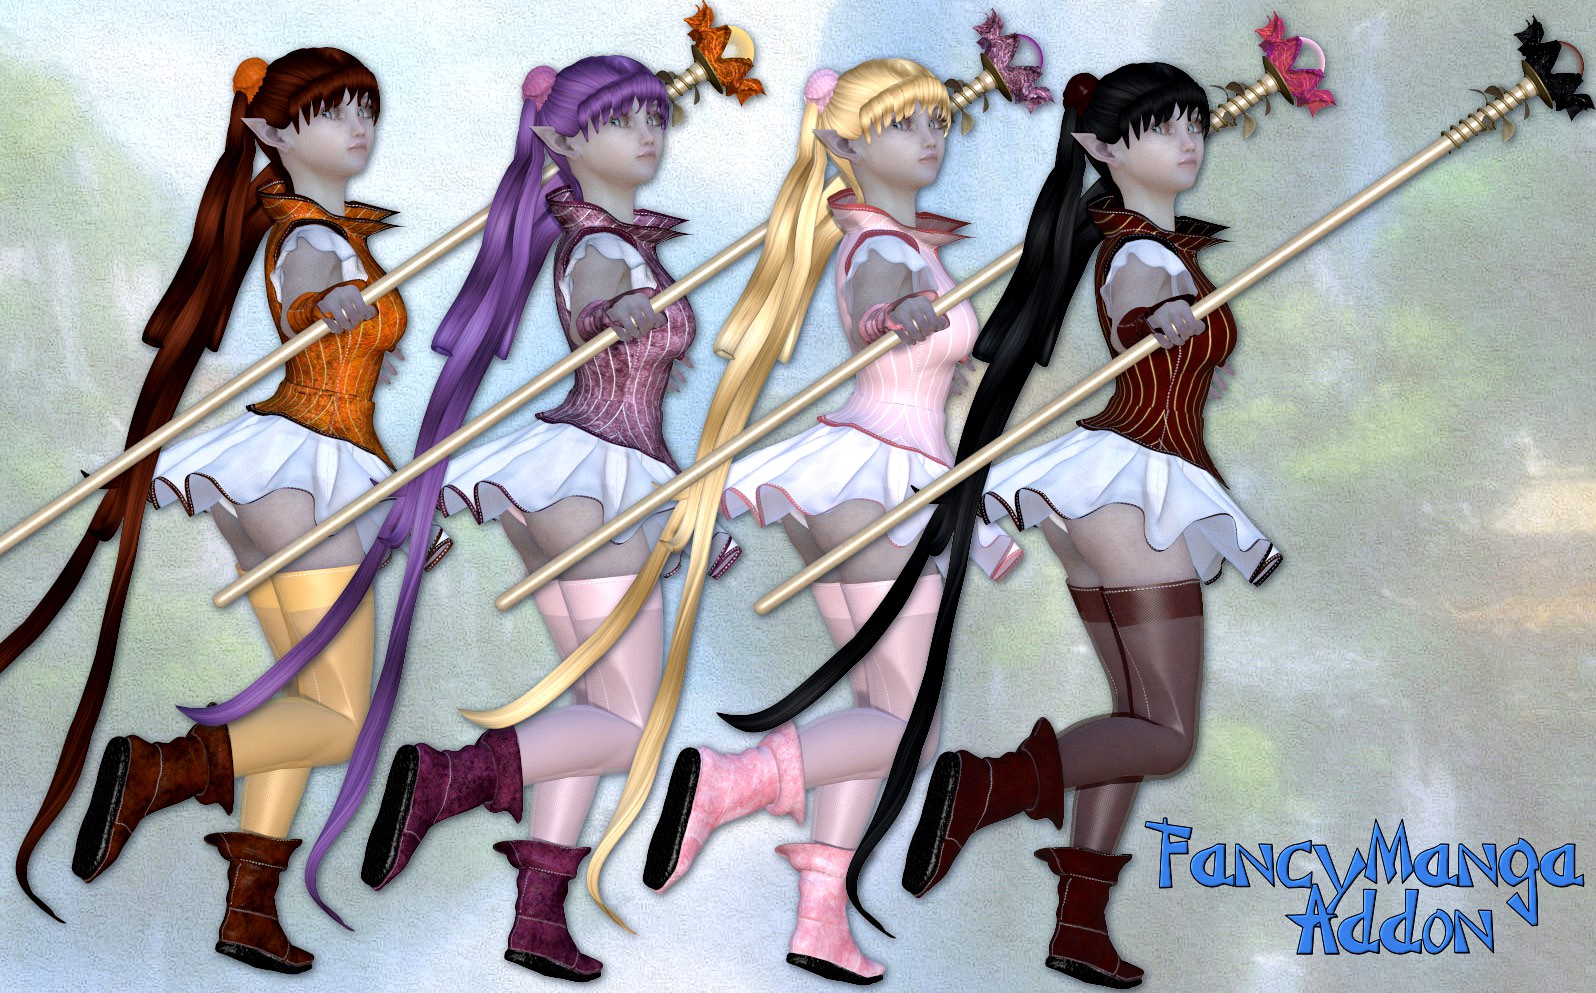 FancyManga Addon for Fancy Manga_Clothing set for V4 A4 and Poser.